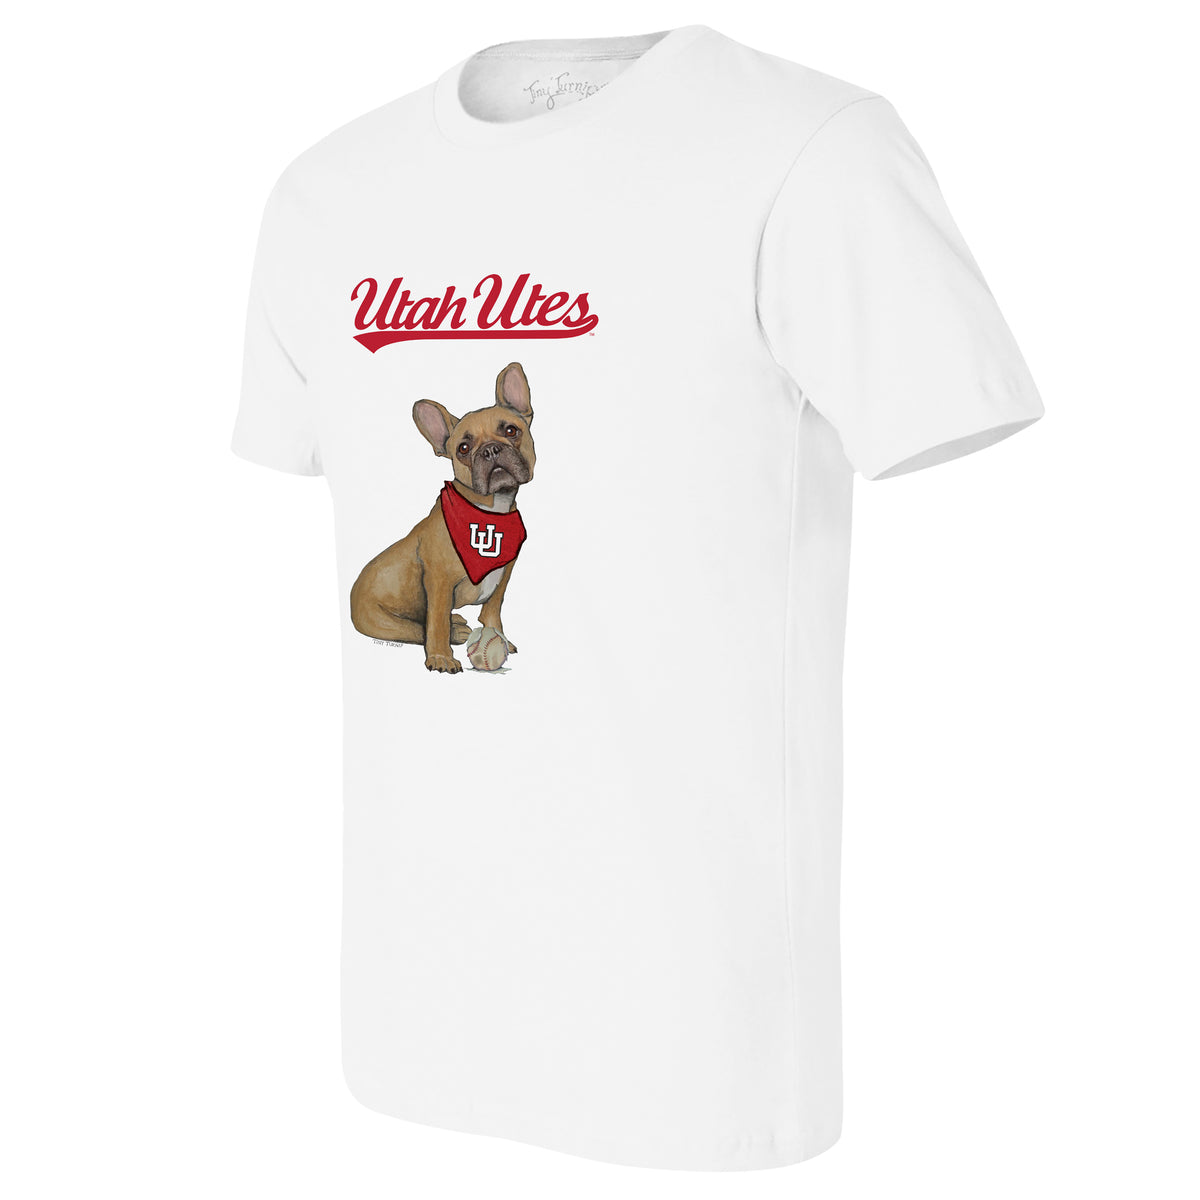 Utah Utes French Bulldog Tee Shirt